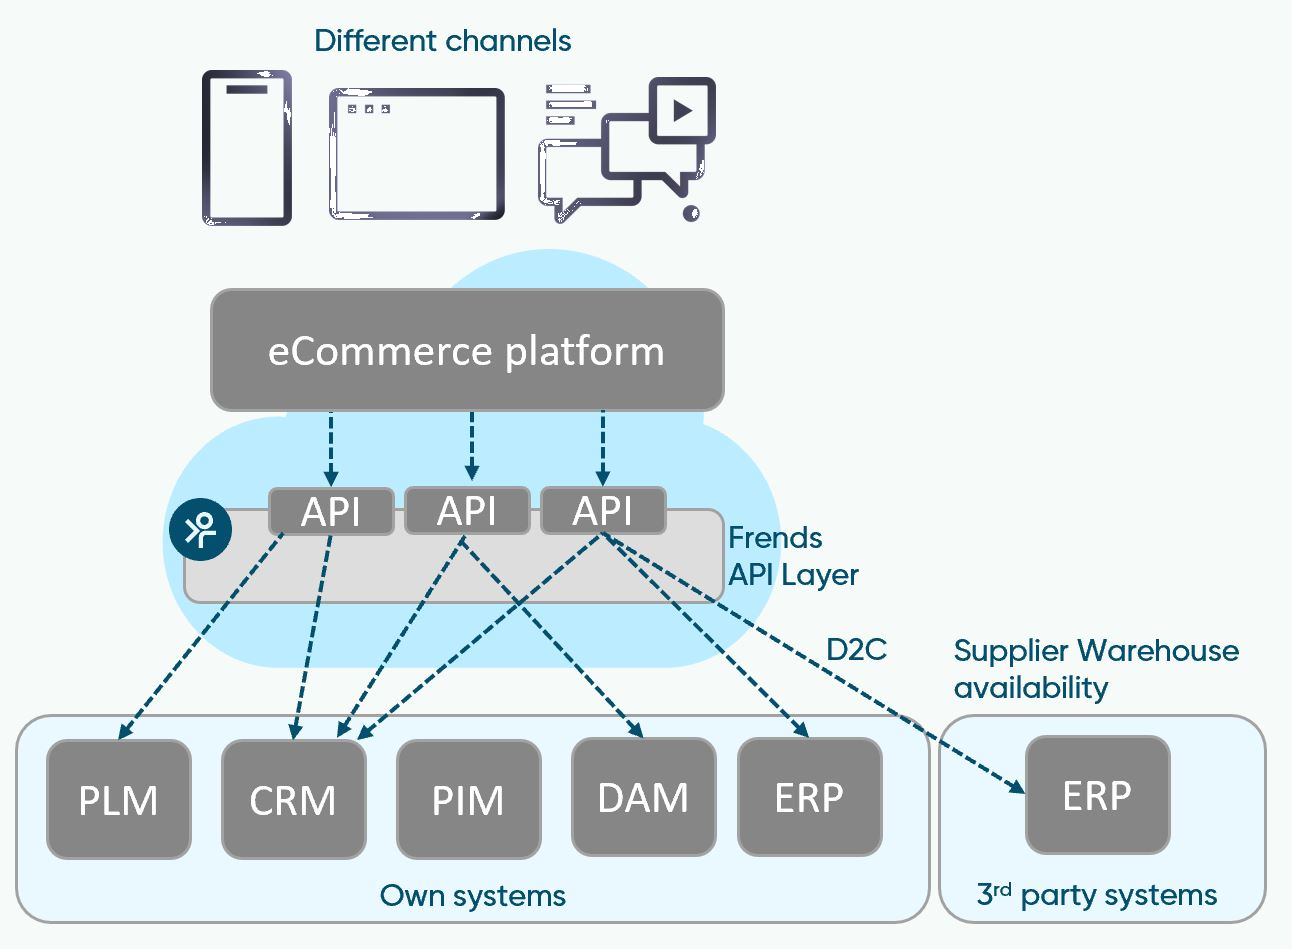 ecommerce platform channels image 